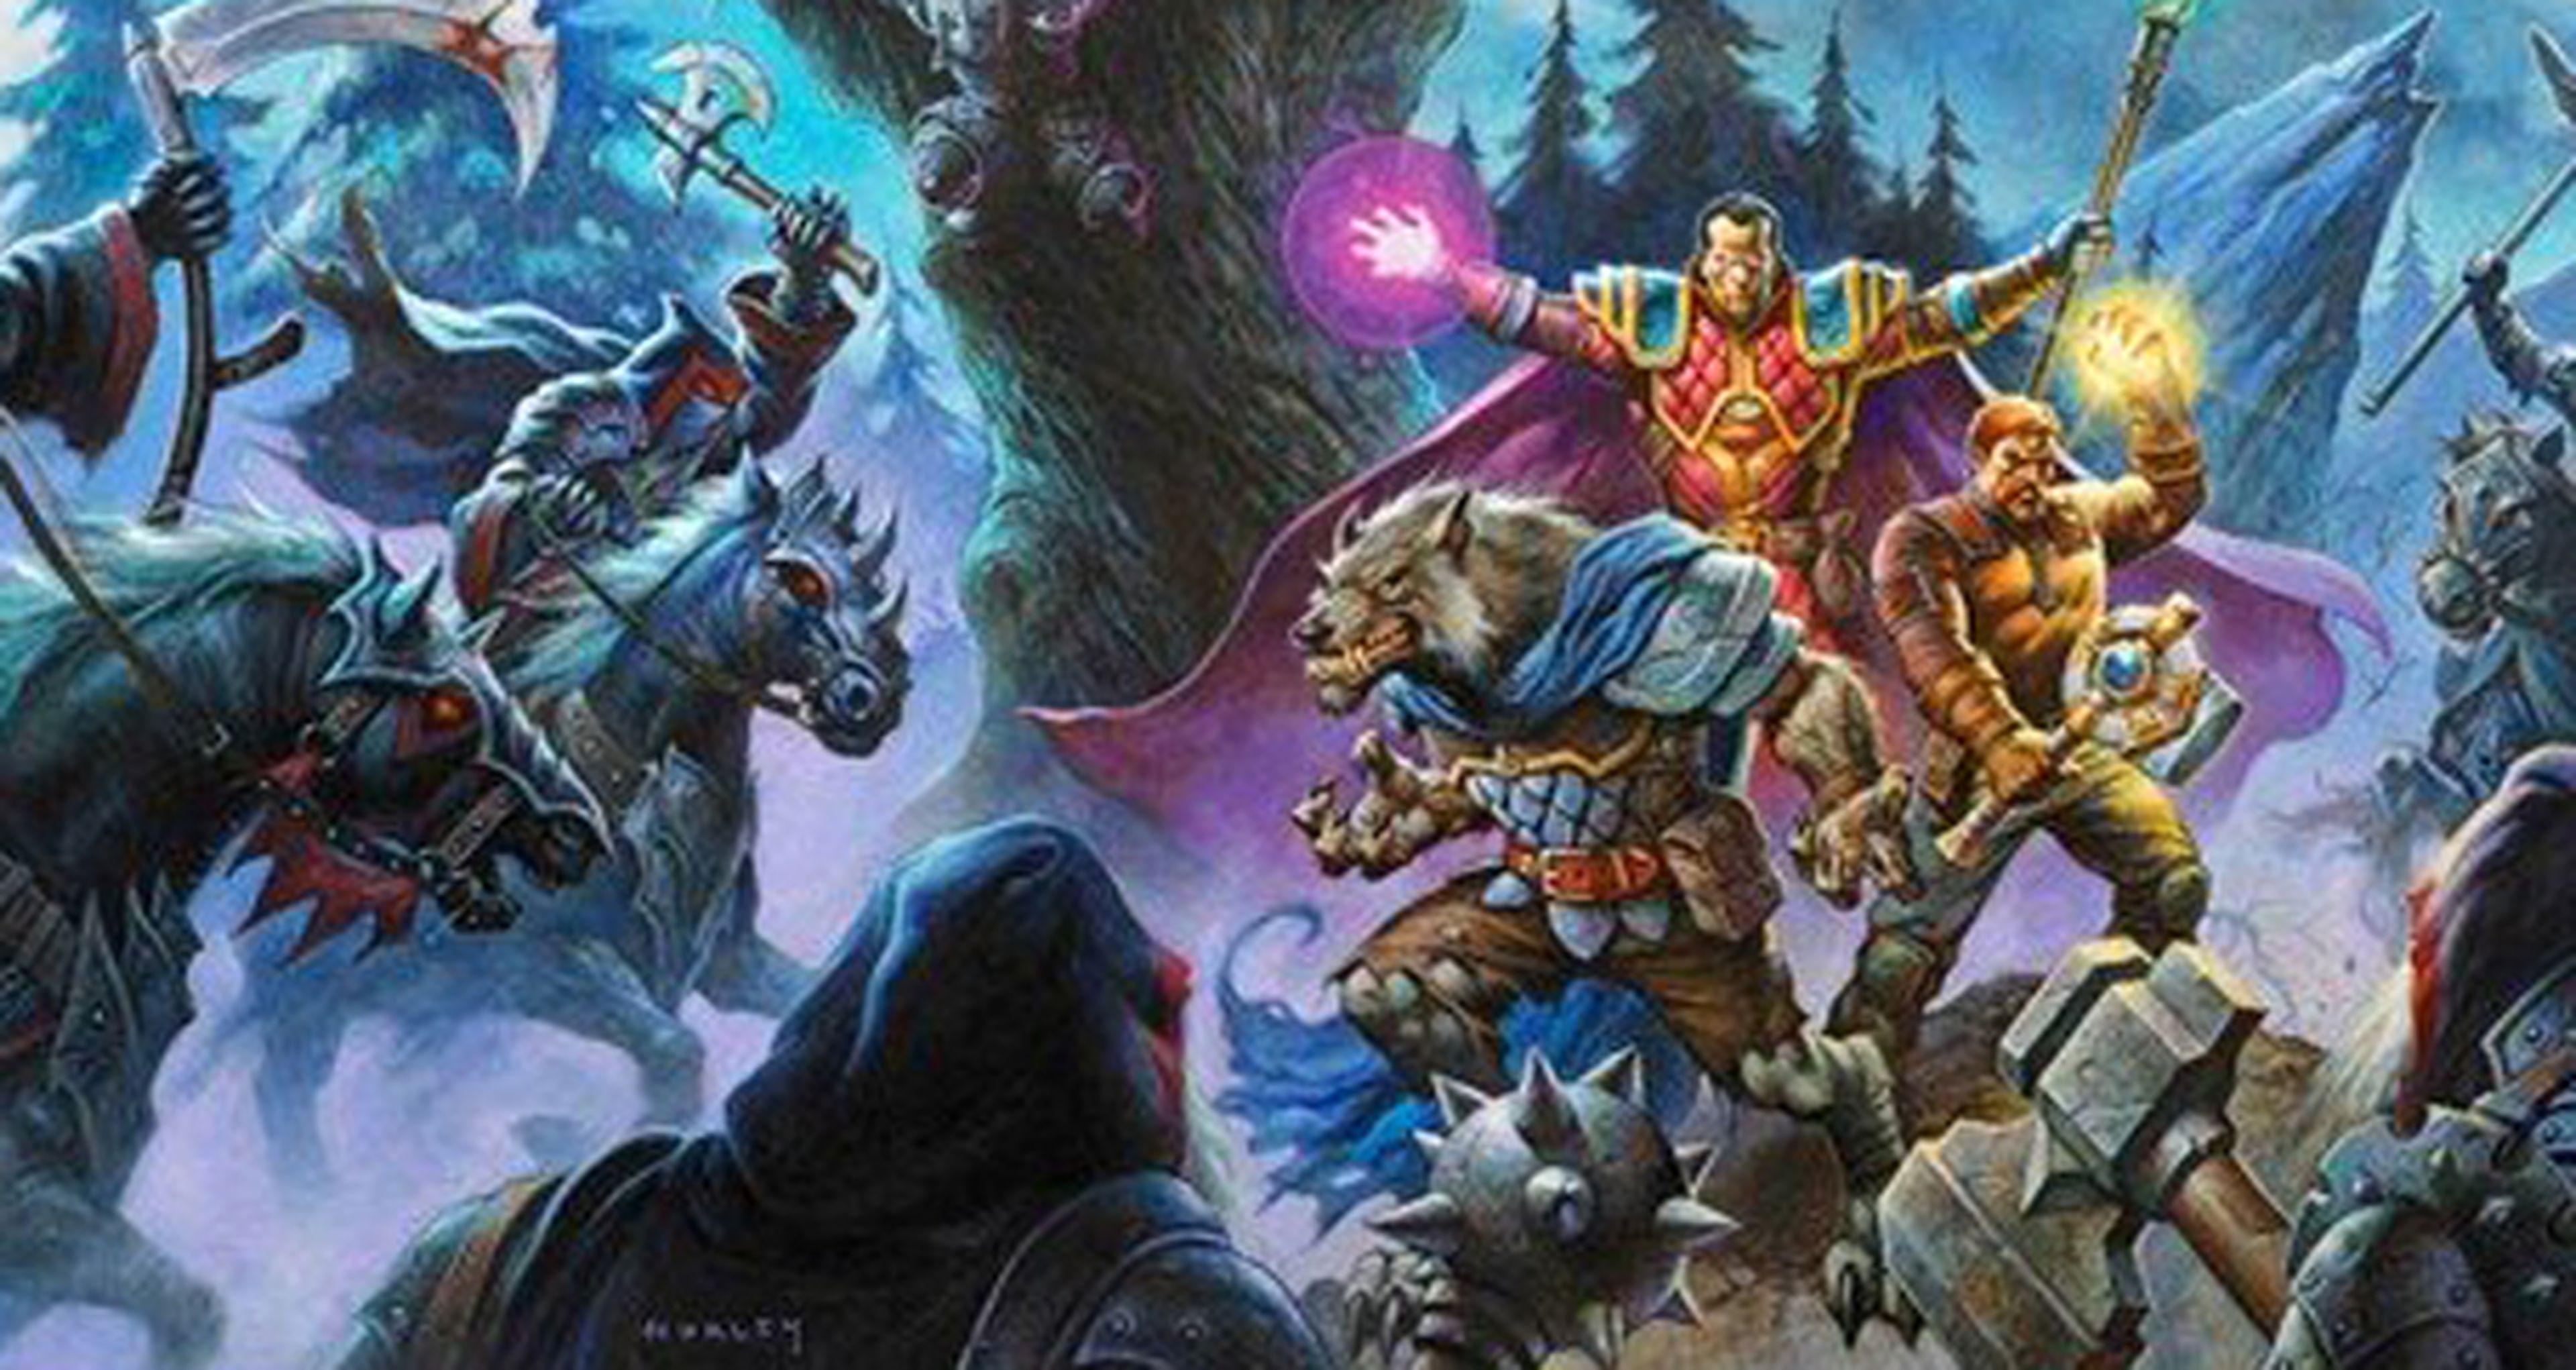 Nuevo cómic de World of Warcraft: Jinetes Oscuros